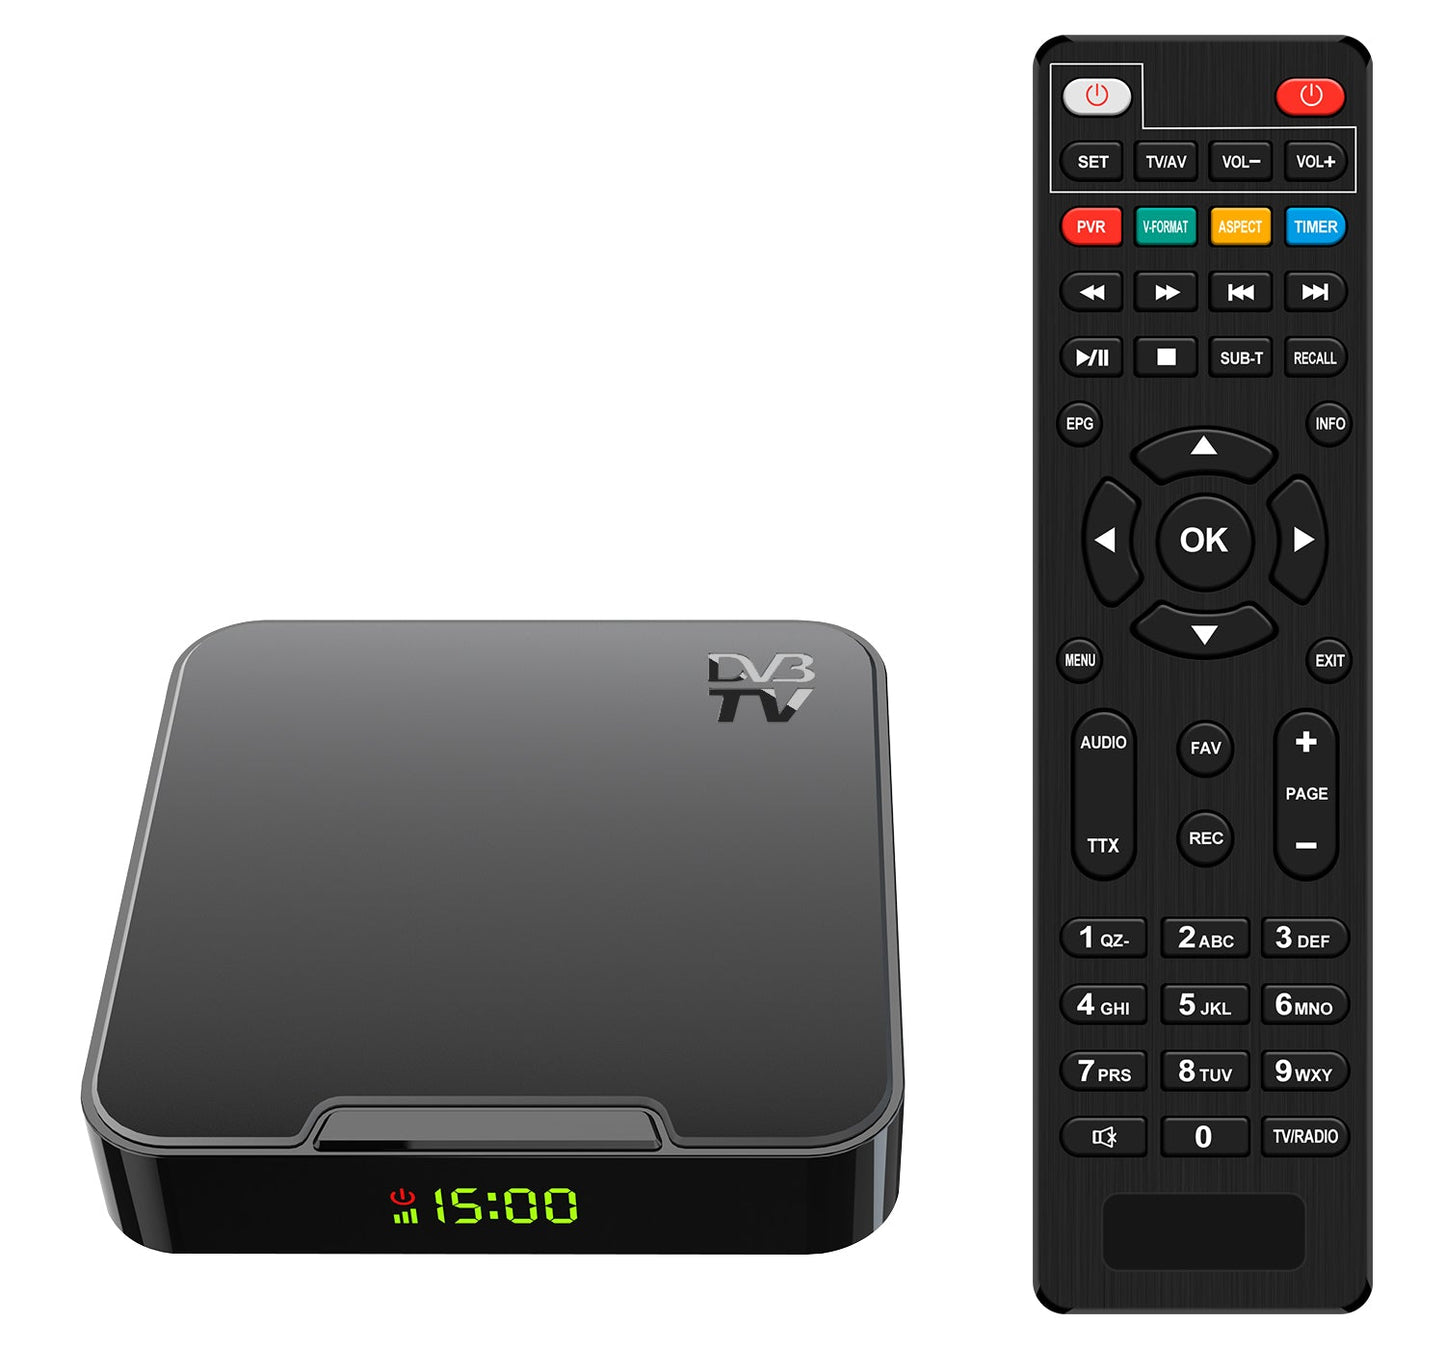 DCOLOR Decoder DVB-T2 C TV BOX